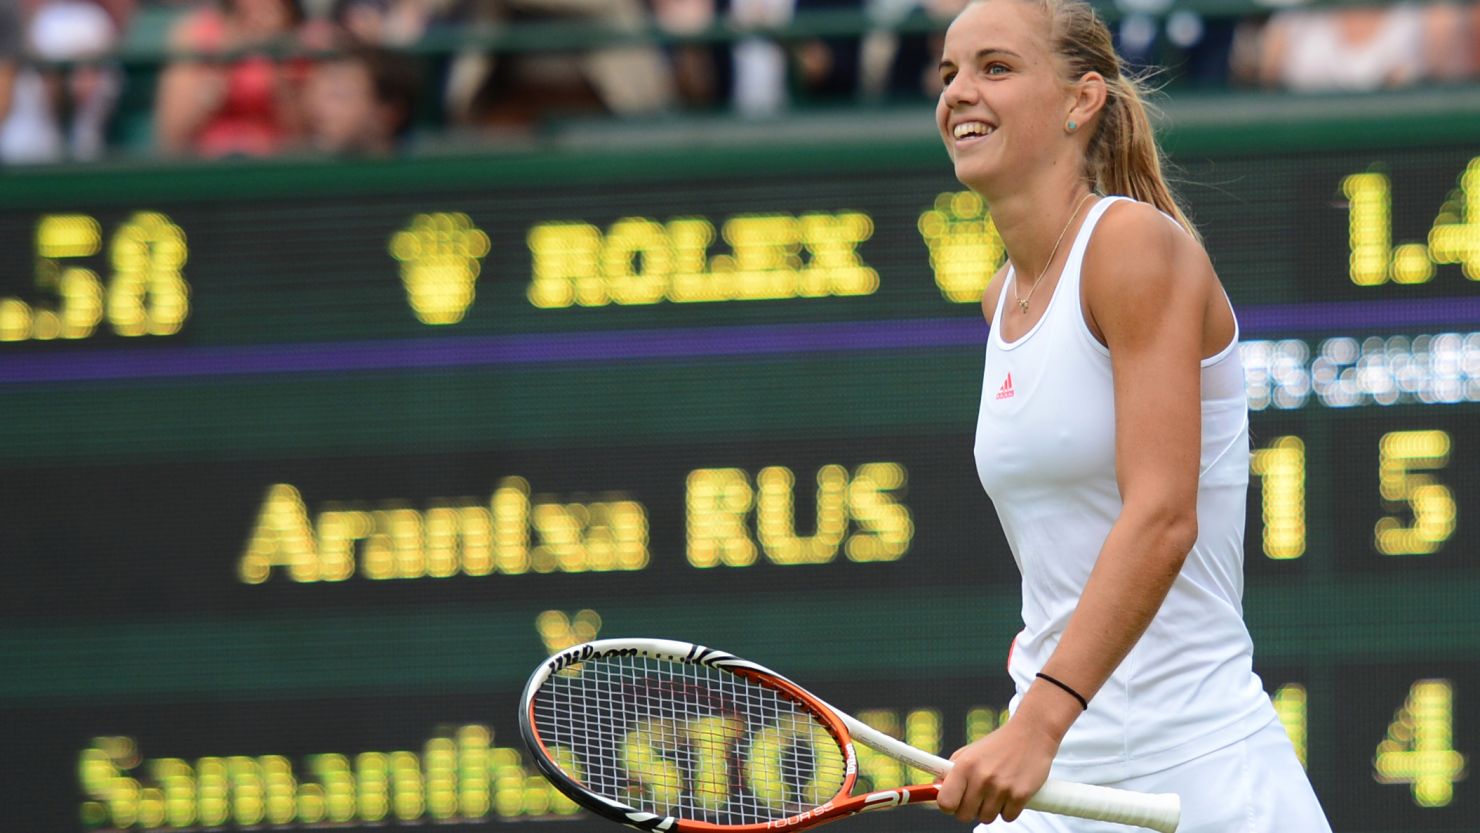 Arantxa Rus celebrates her second-round victory over Australia's Samantha Stosur on day three at Wimbledon.